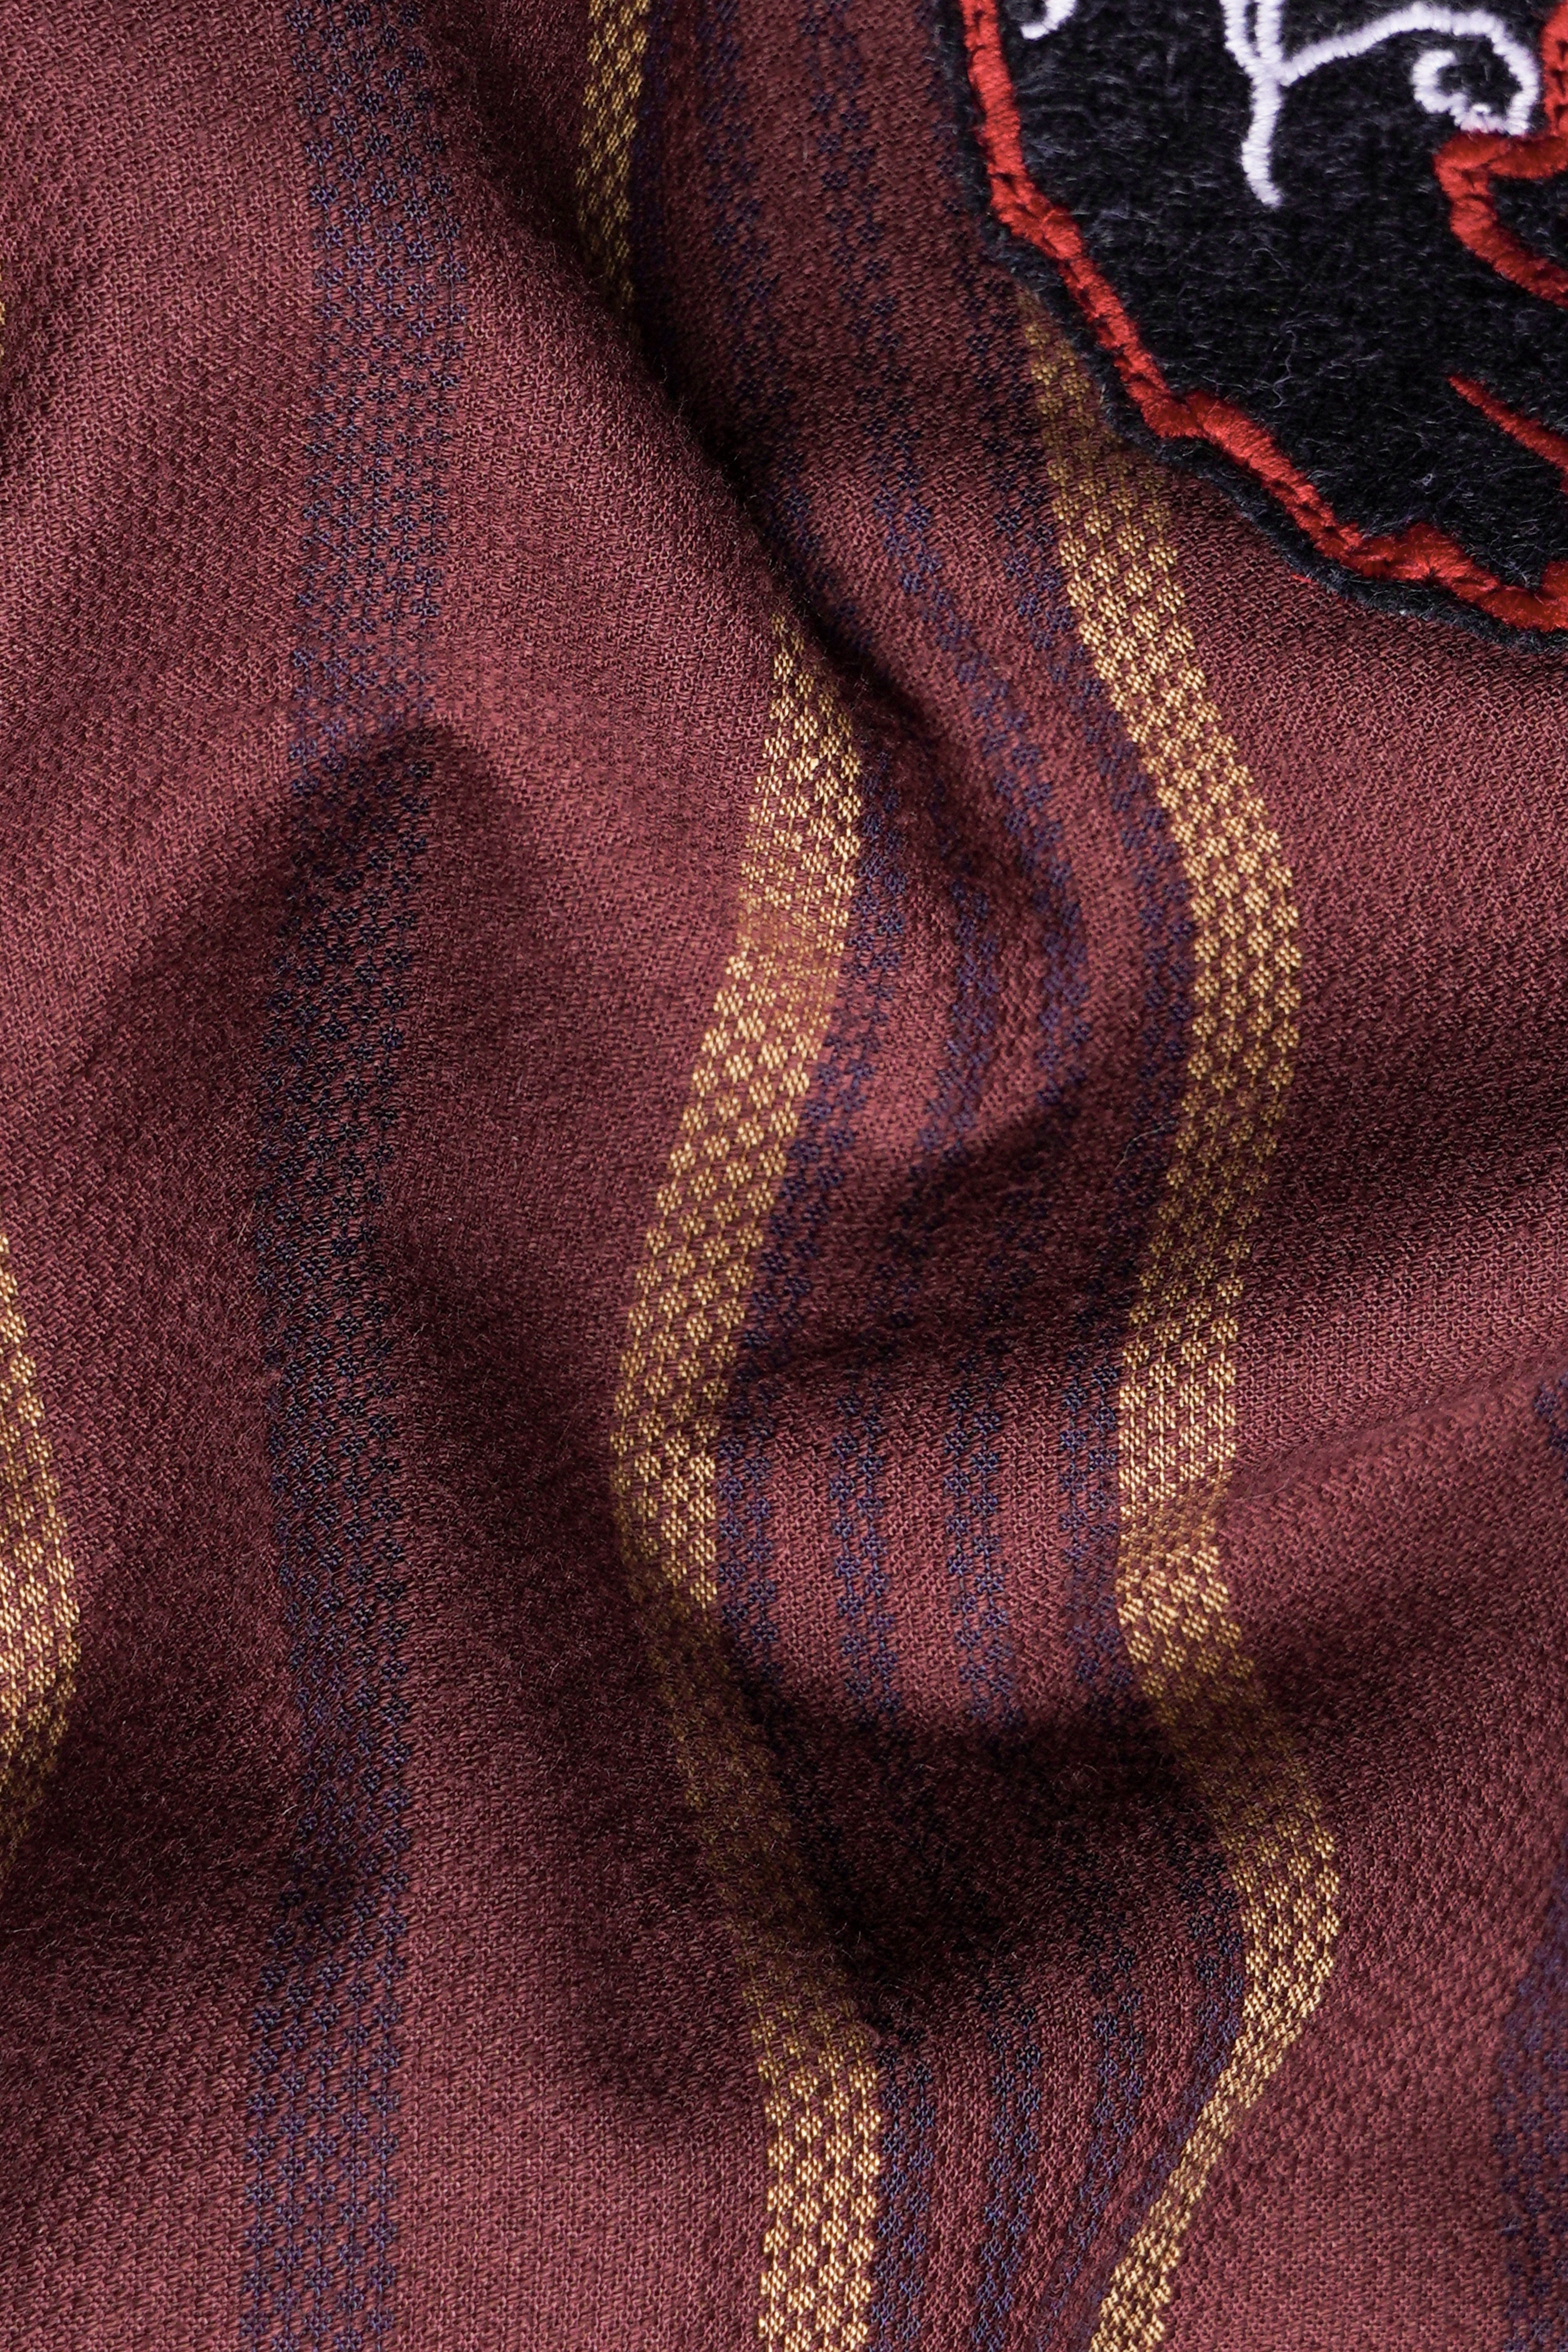 Congo Brown Multicolour Striped with Funky Patchwork Dobby Giza Cotton Designer Shirt 8747-CC-SS-E222-38, 8747-CC-SS-E222-H-38, 8747-CC-SS-E222-39, 8747-CC-SS-E222-H-39, 8747-CC-SS-E222-40, 8747-CC-SS-E222-H-40, 8747-CC-SS-E222-42, 8747-CC-SS-E222-H-42, 8747-CC-SS-E222-44, 8747-CC-SS-E222-H-44, 8747-CC-SS-E222-46, 8747-CC-SS-E222-H-46, 8747-CC-SS-E222-48, 8747-CC-SS-E222-H-48, 8747-CC-SS-E222-50, 8747-CC-SS-E222-H-50, 8747-CC-SS-E222-52, 8747-CC-SS-E222-H-52